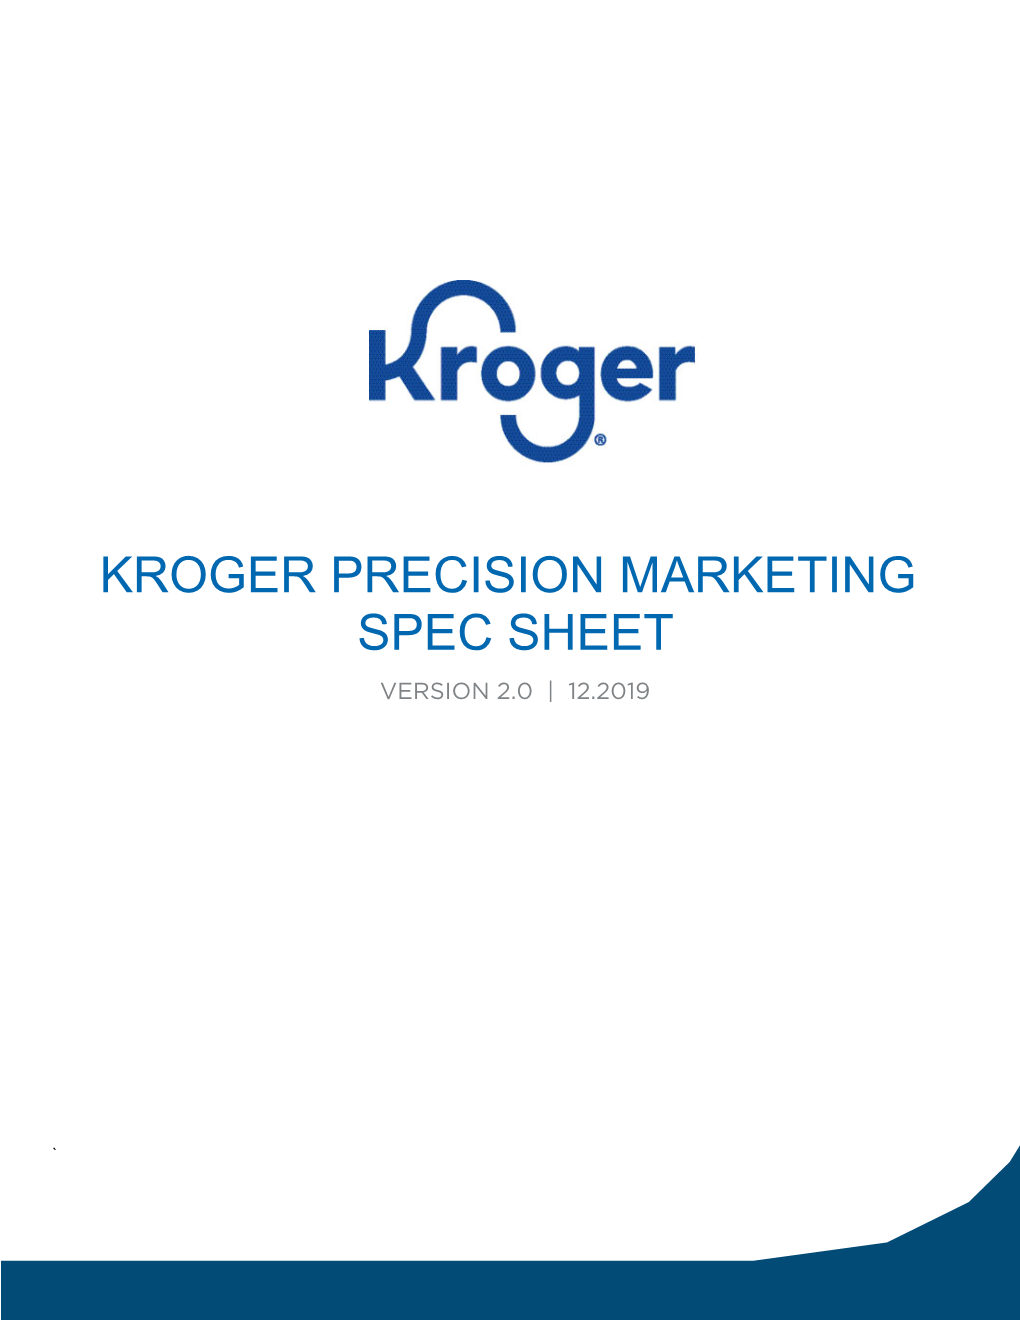 Kroger Precision Marketing Spec Sheet Version 2.0 | 12.2019